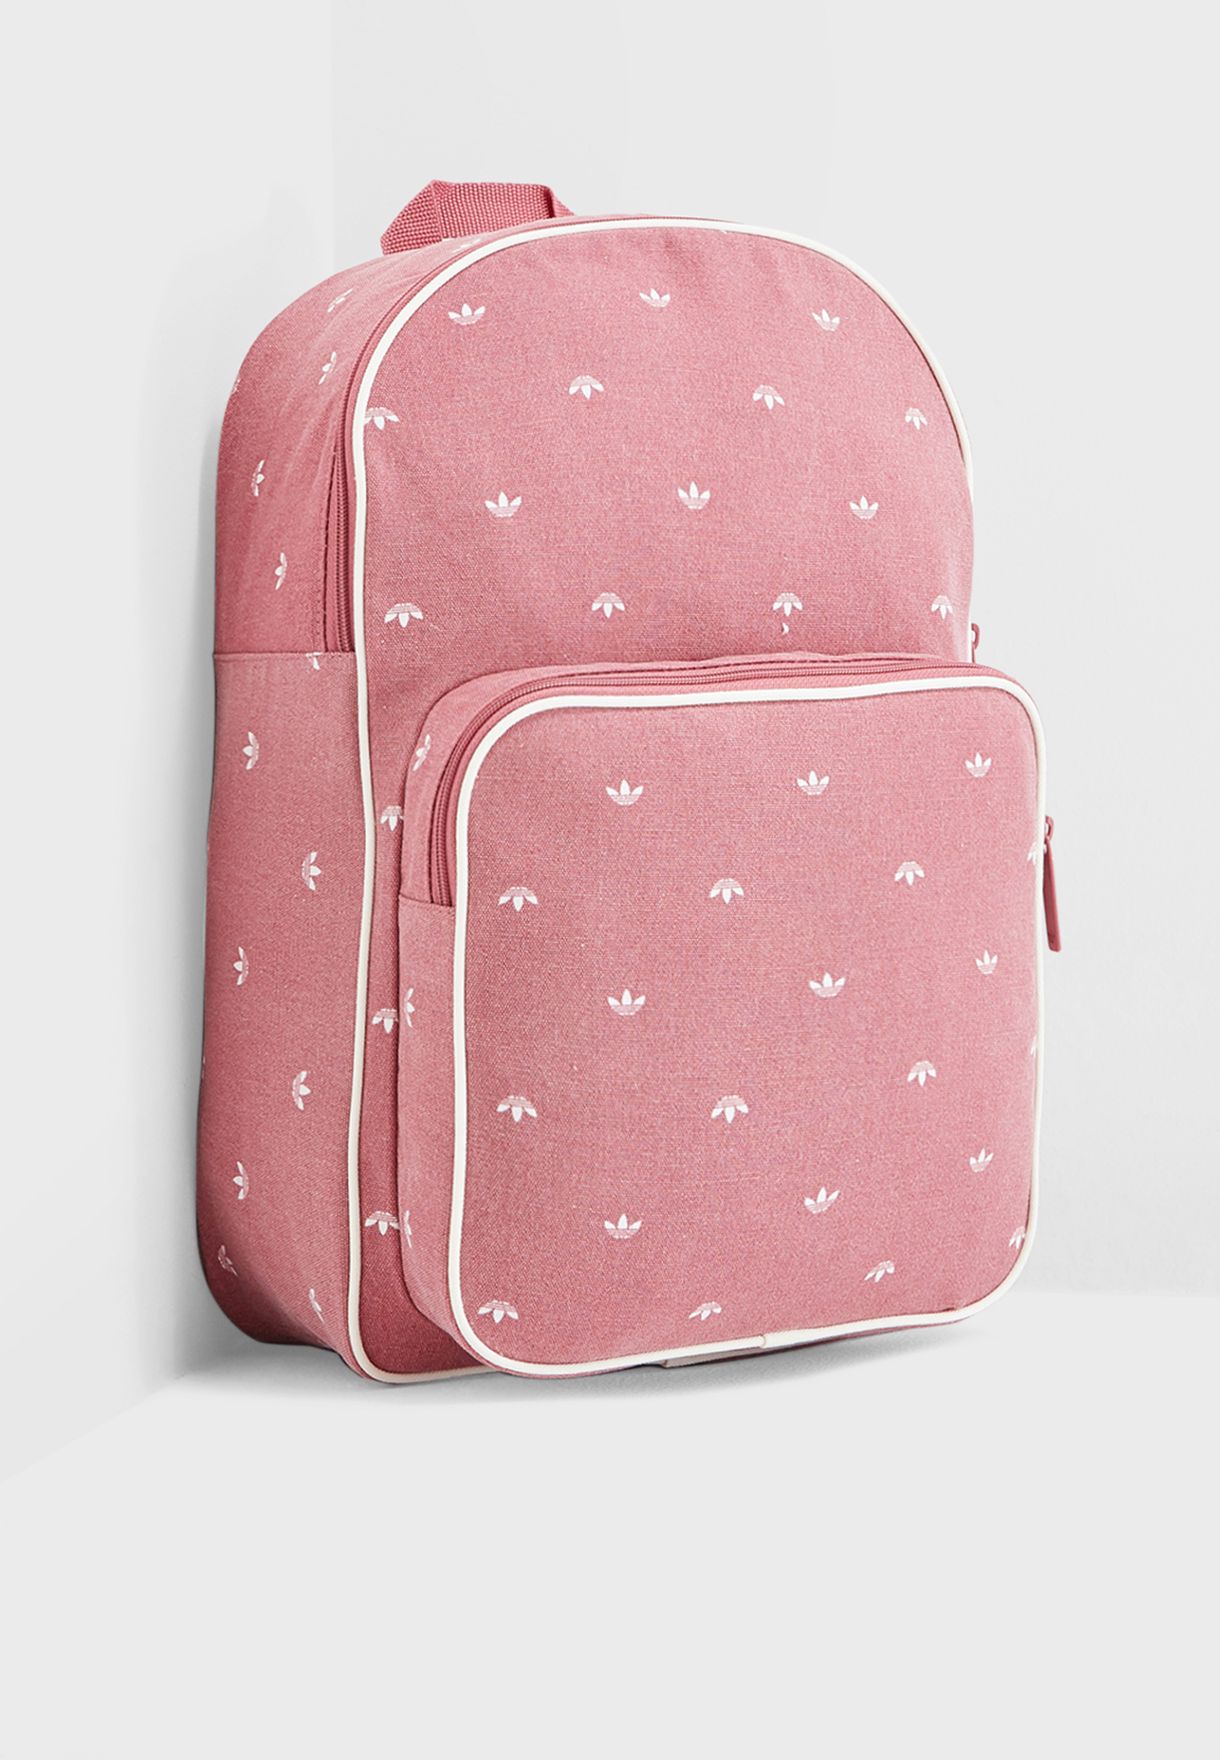 adidas trefoil backpack pink